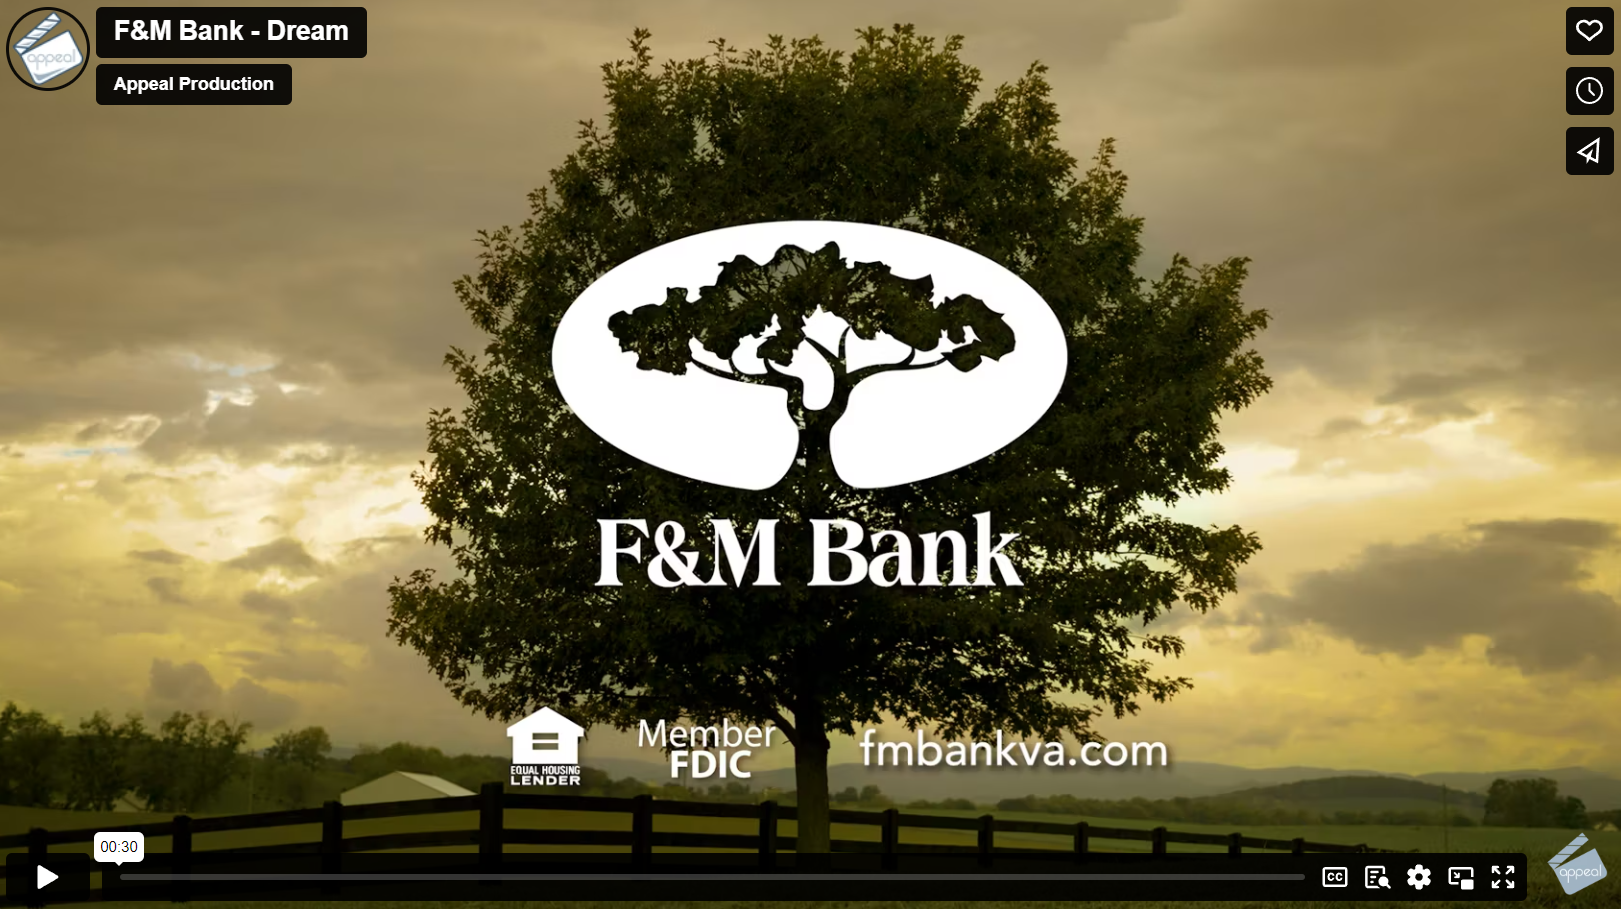 Customer Marketing: F&M Bank